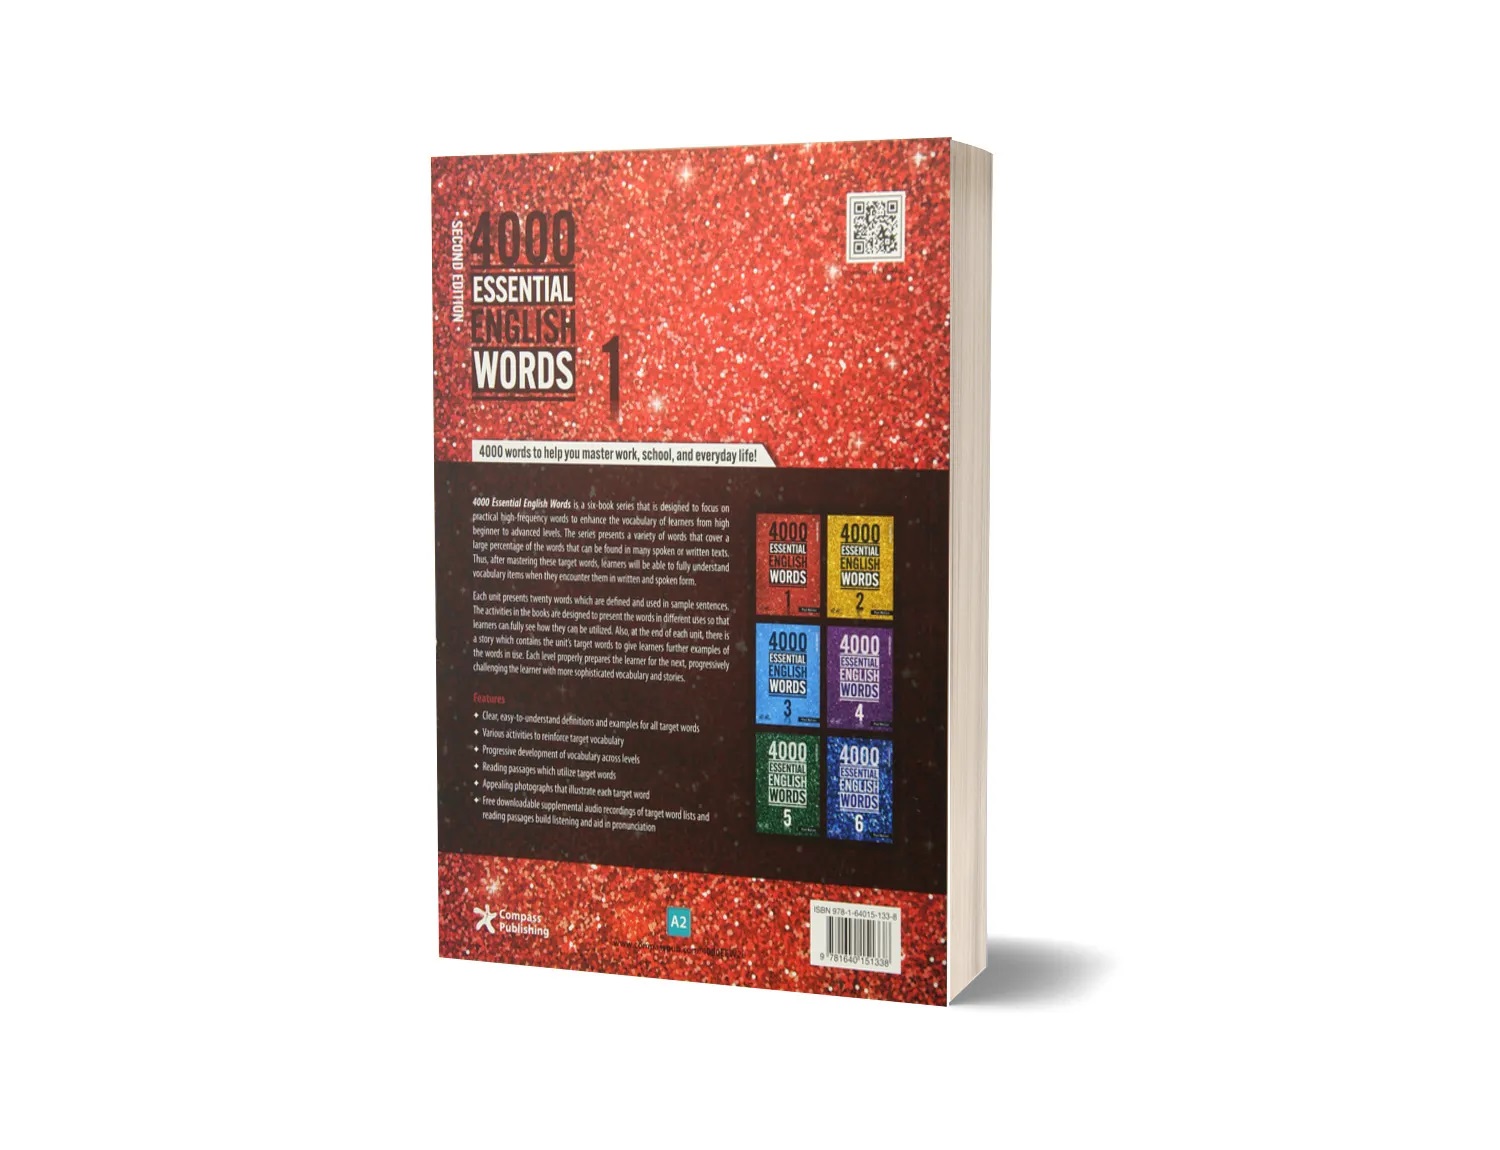 4000 Essential English Words 1 2 3 4 5 6 - 2nd Edition - Student Book Intermediate A2 Free audio mp3 - Sách chuẩn nhập khẩu trực tiếp từ NXB Compass